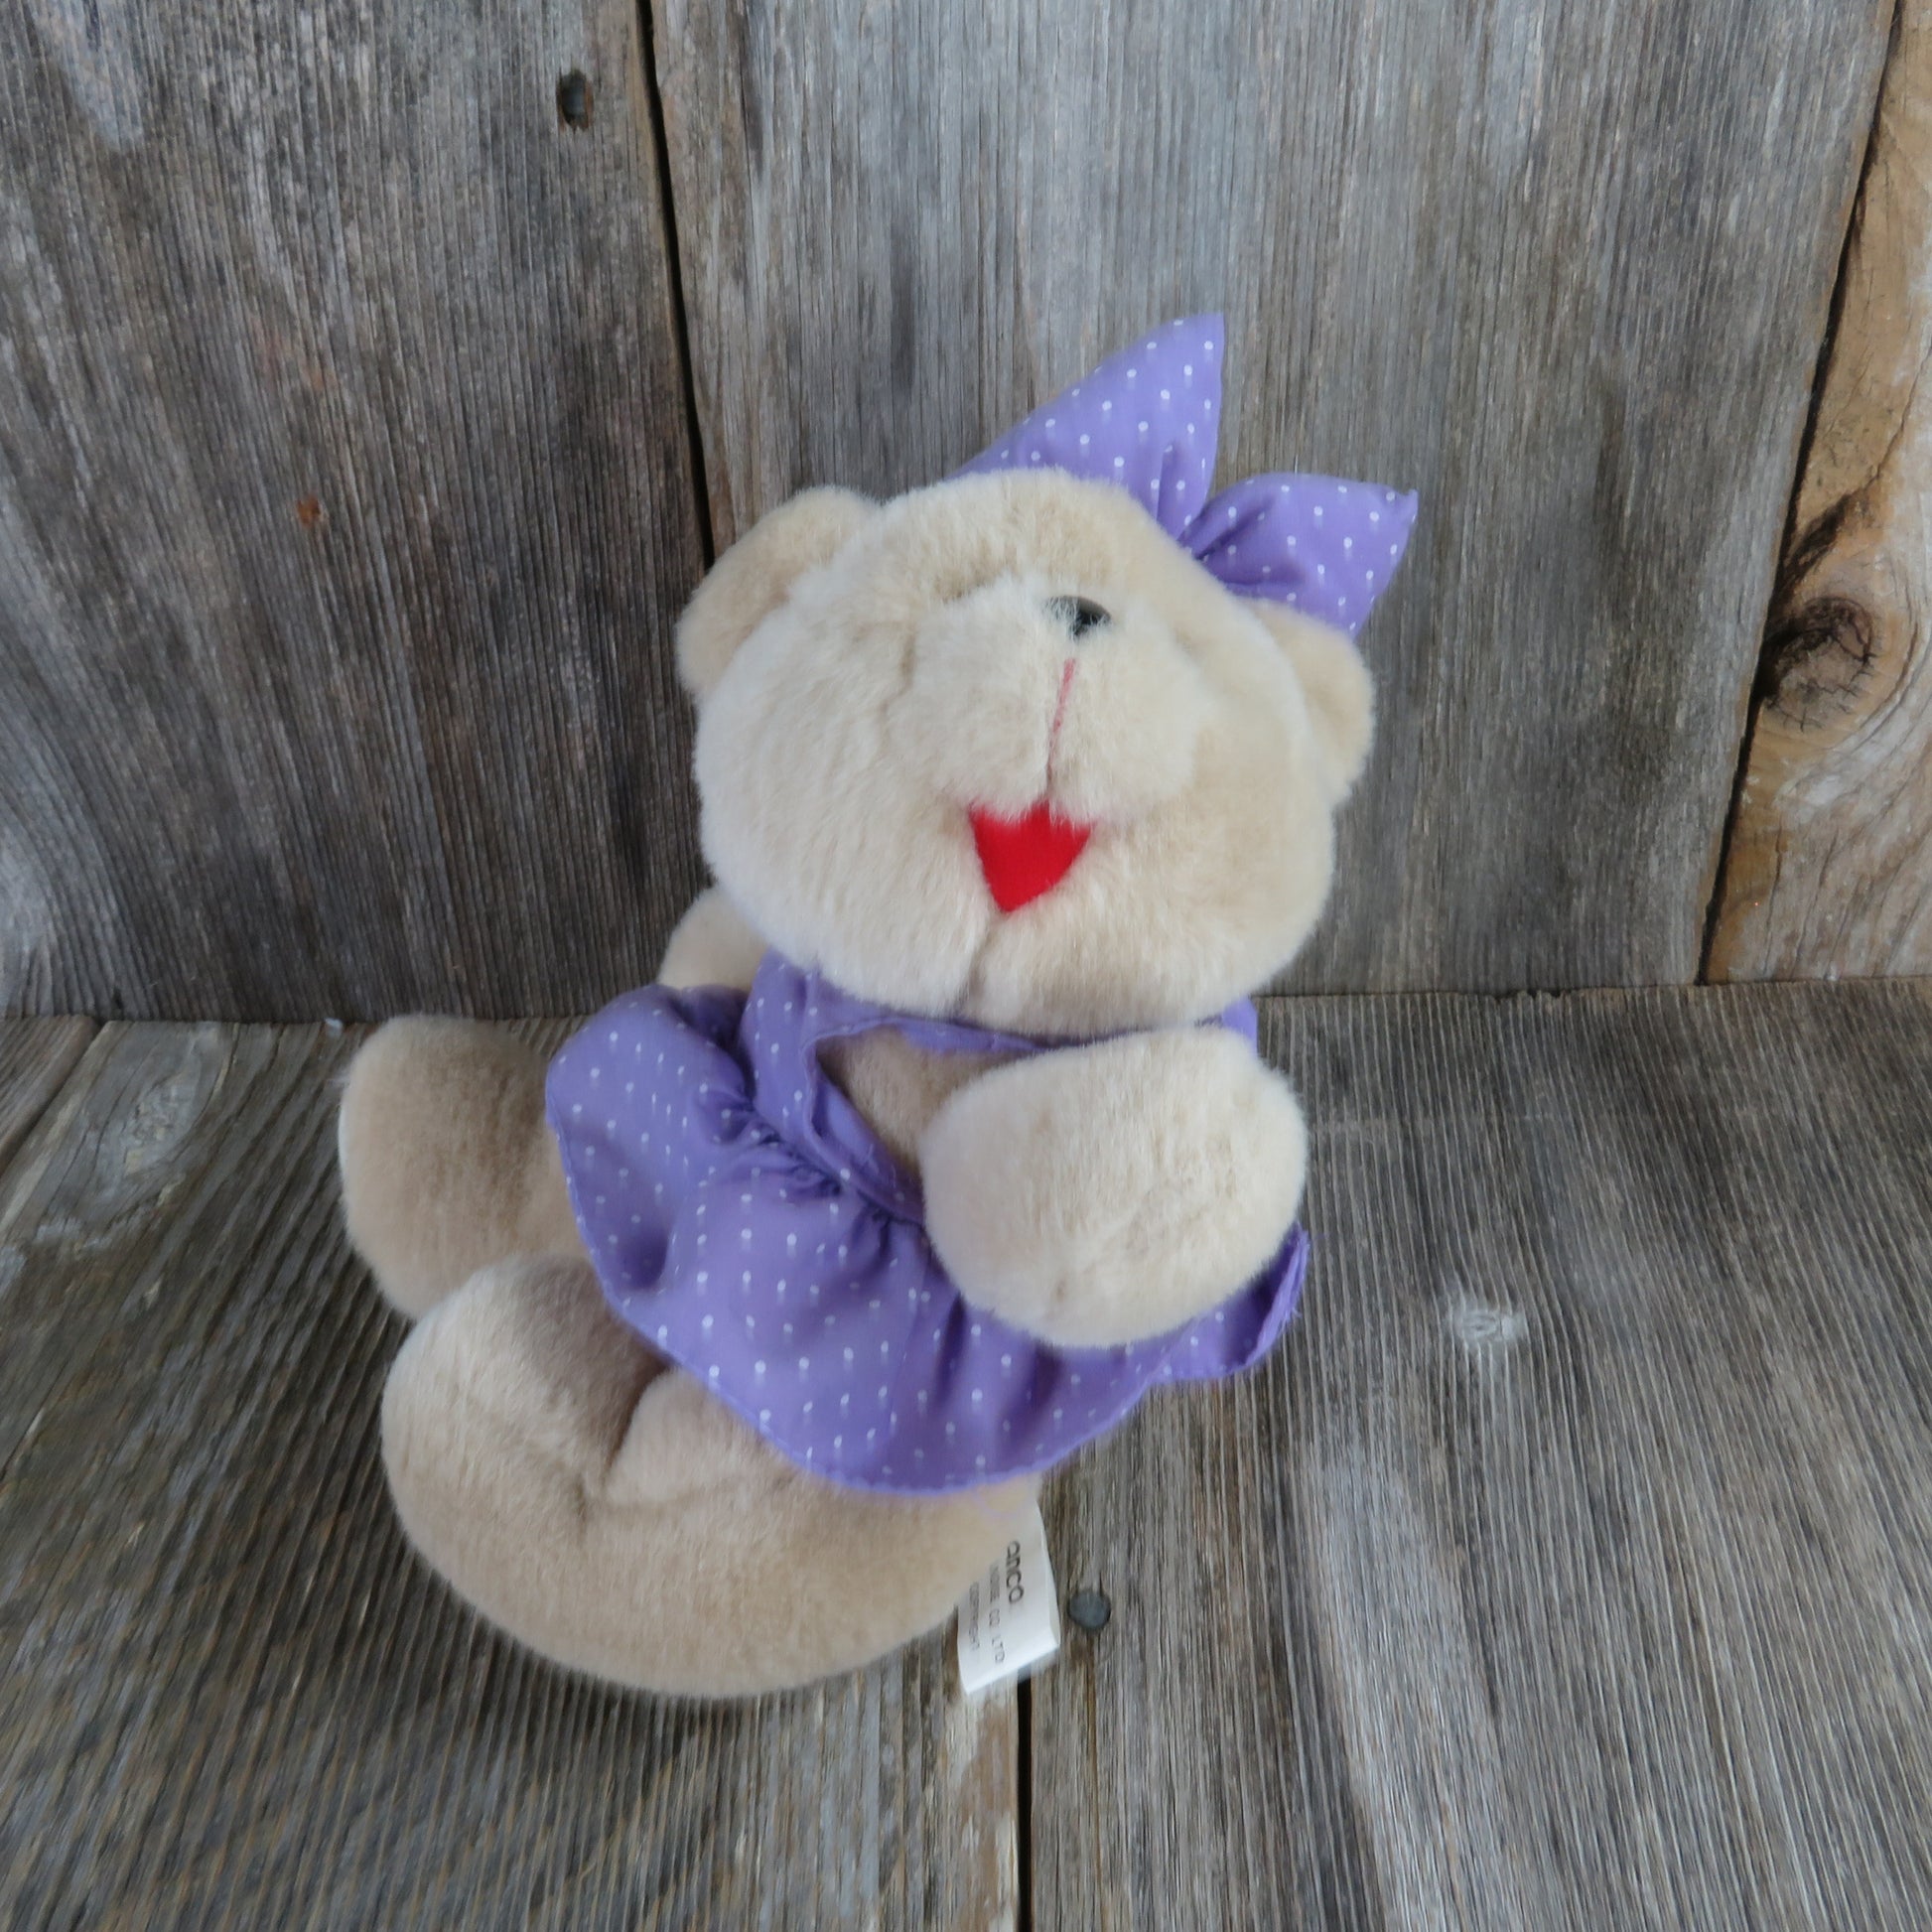 Vintage Teddy Bear Plush Loving Touch Girl Purple Puffy Bow Anco 1994 Polka Dot Dress Smile - At Grandma's Table